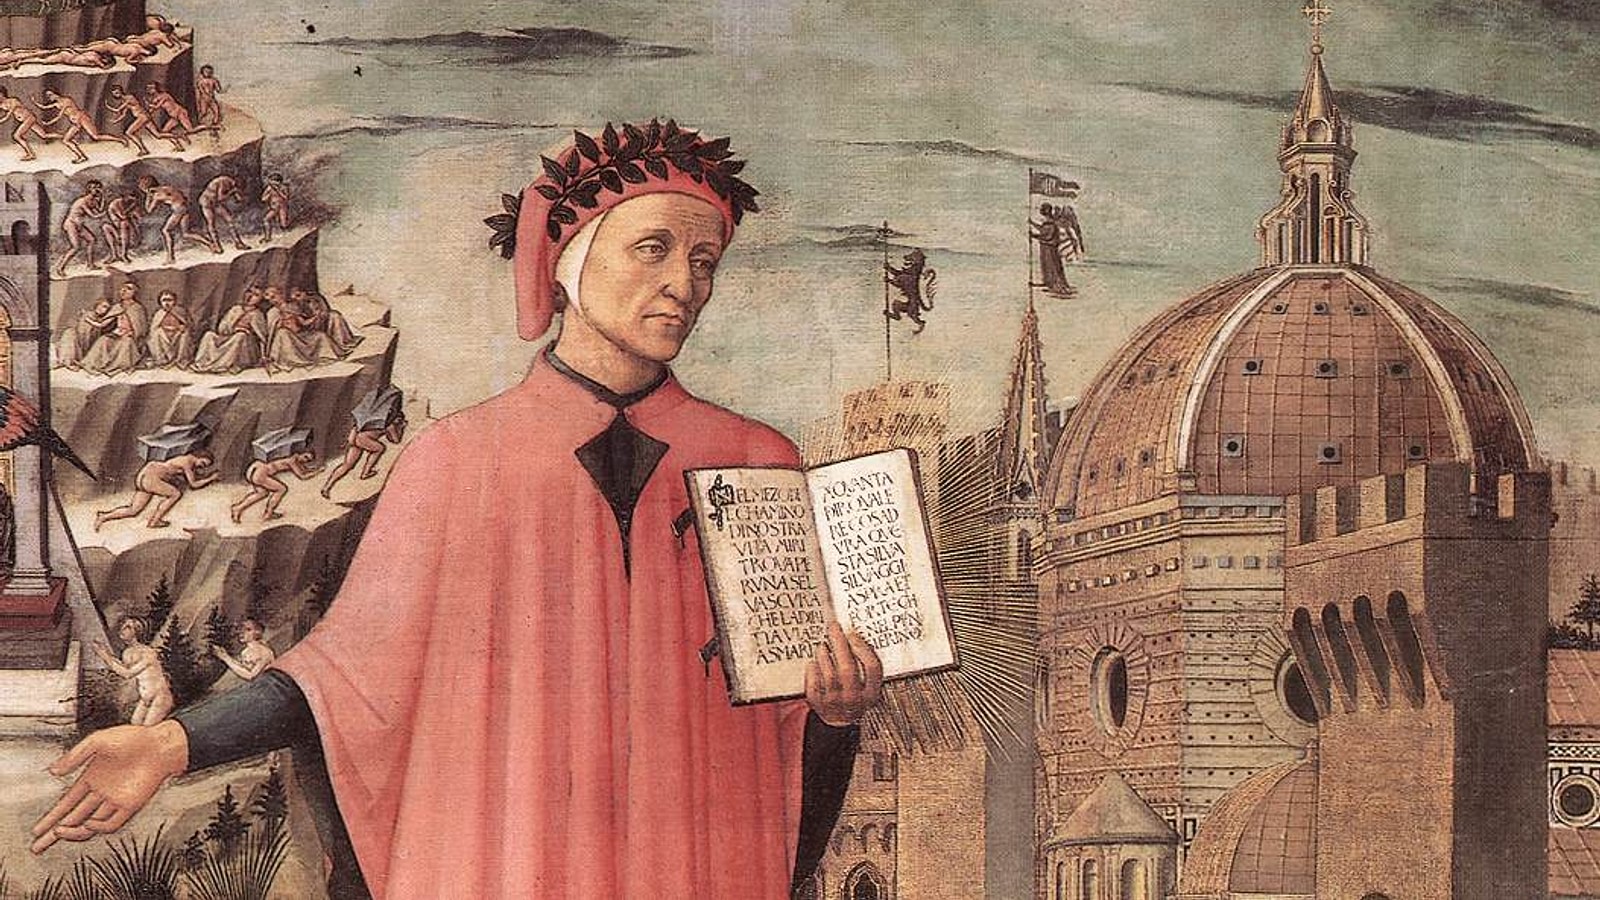 Inferno (Italian Edition) by Alighieri, Dante